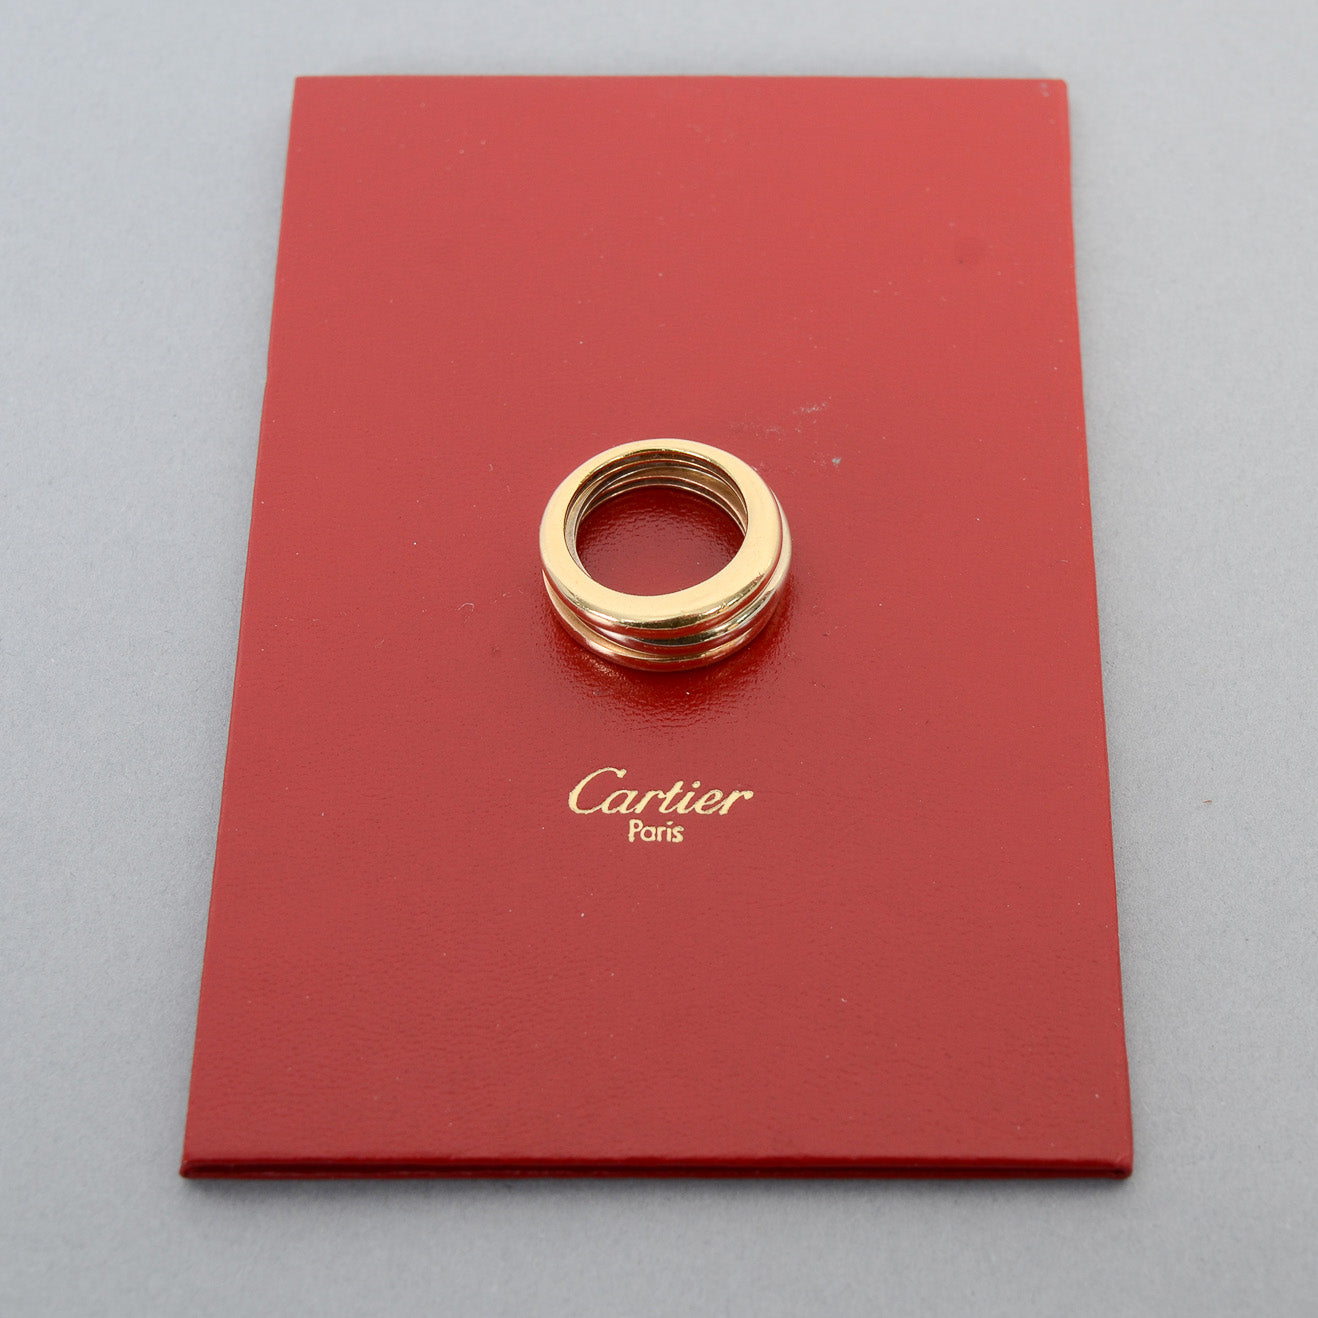 1413892-cartier-paris-ring-on-red-certificate-envelope